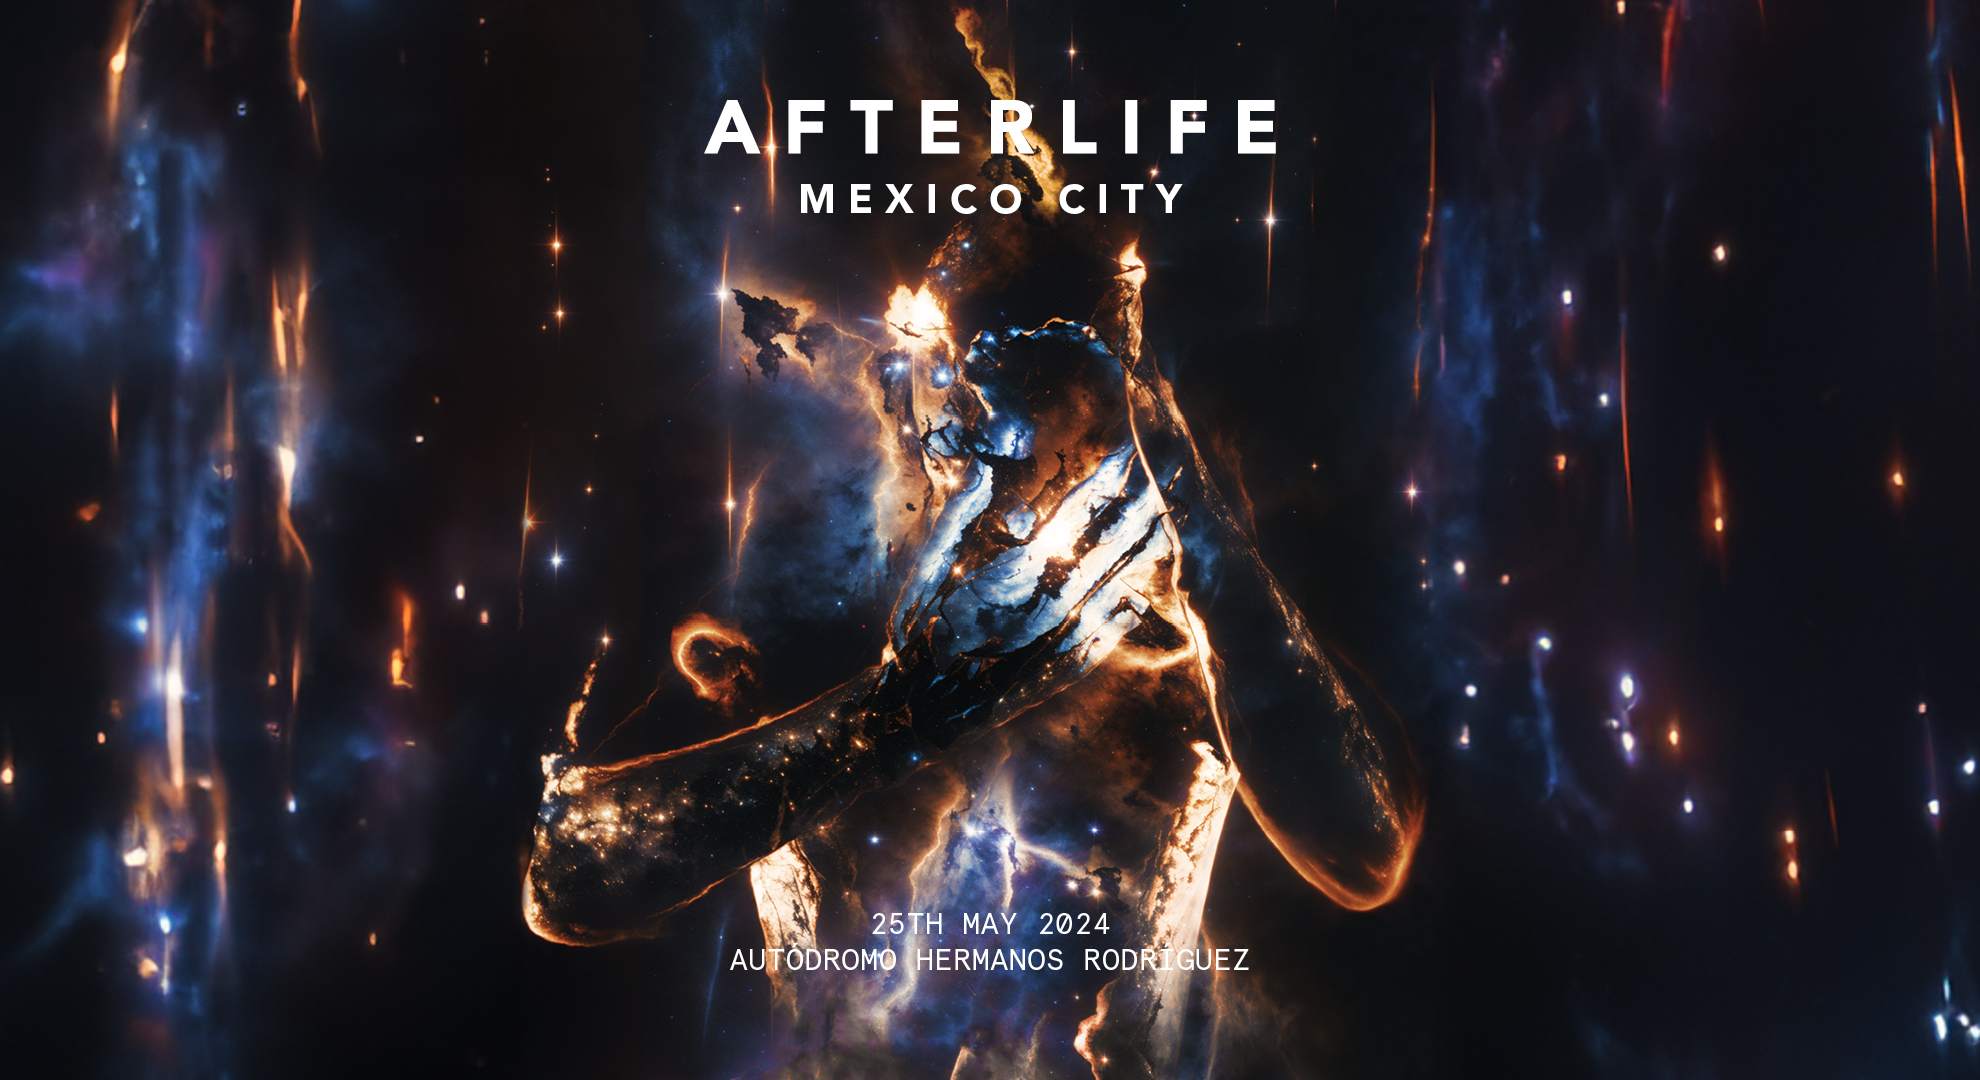 Afterlife Mexico City 2024 at Autodromo Hermanos Rodriguez, Mexico City